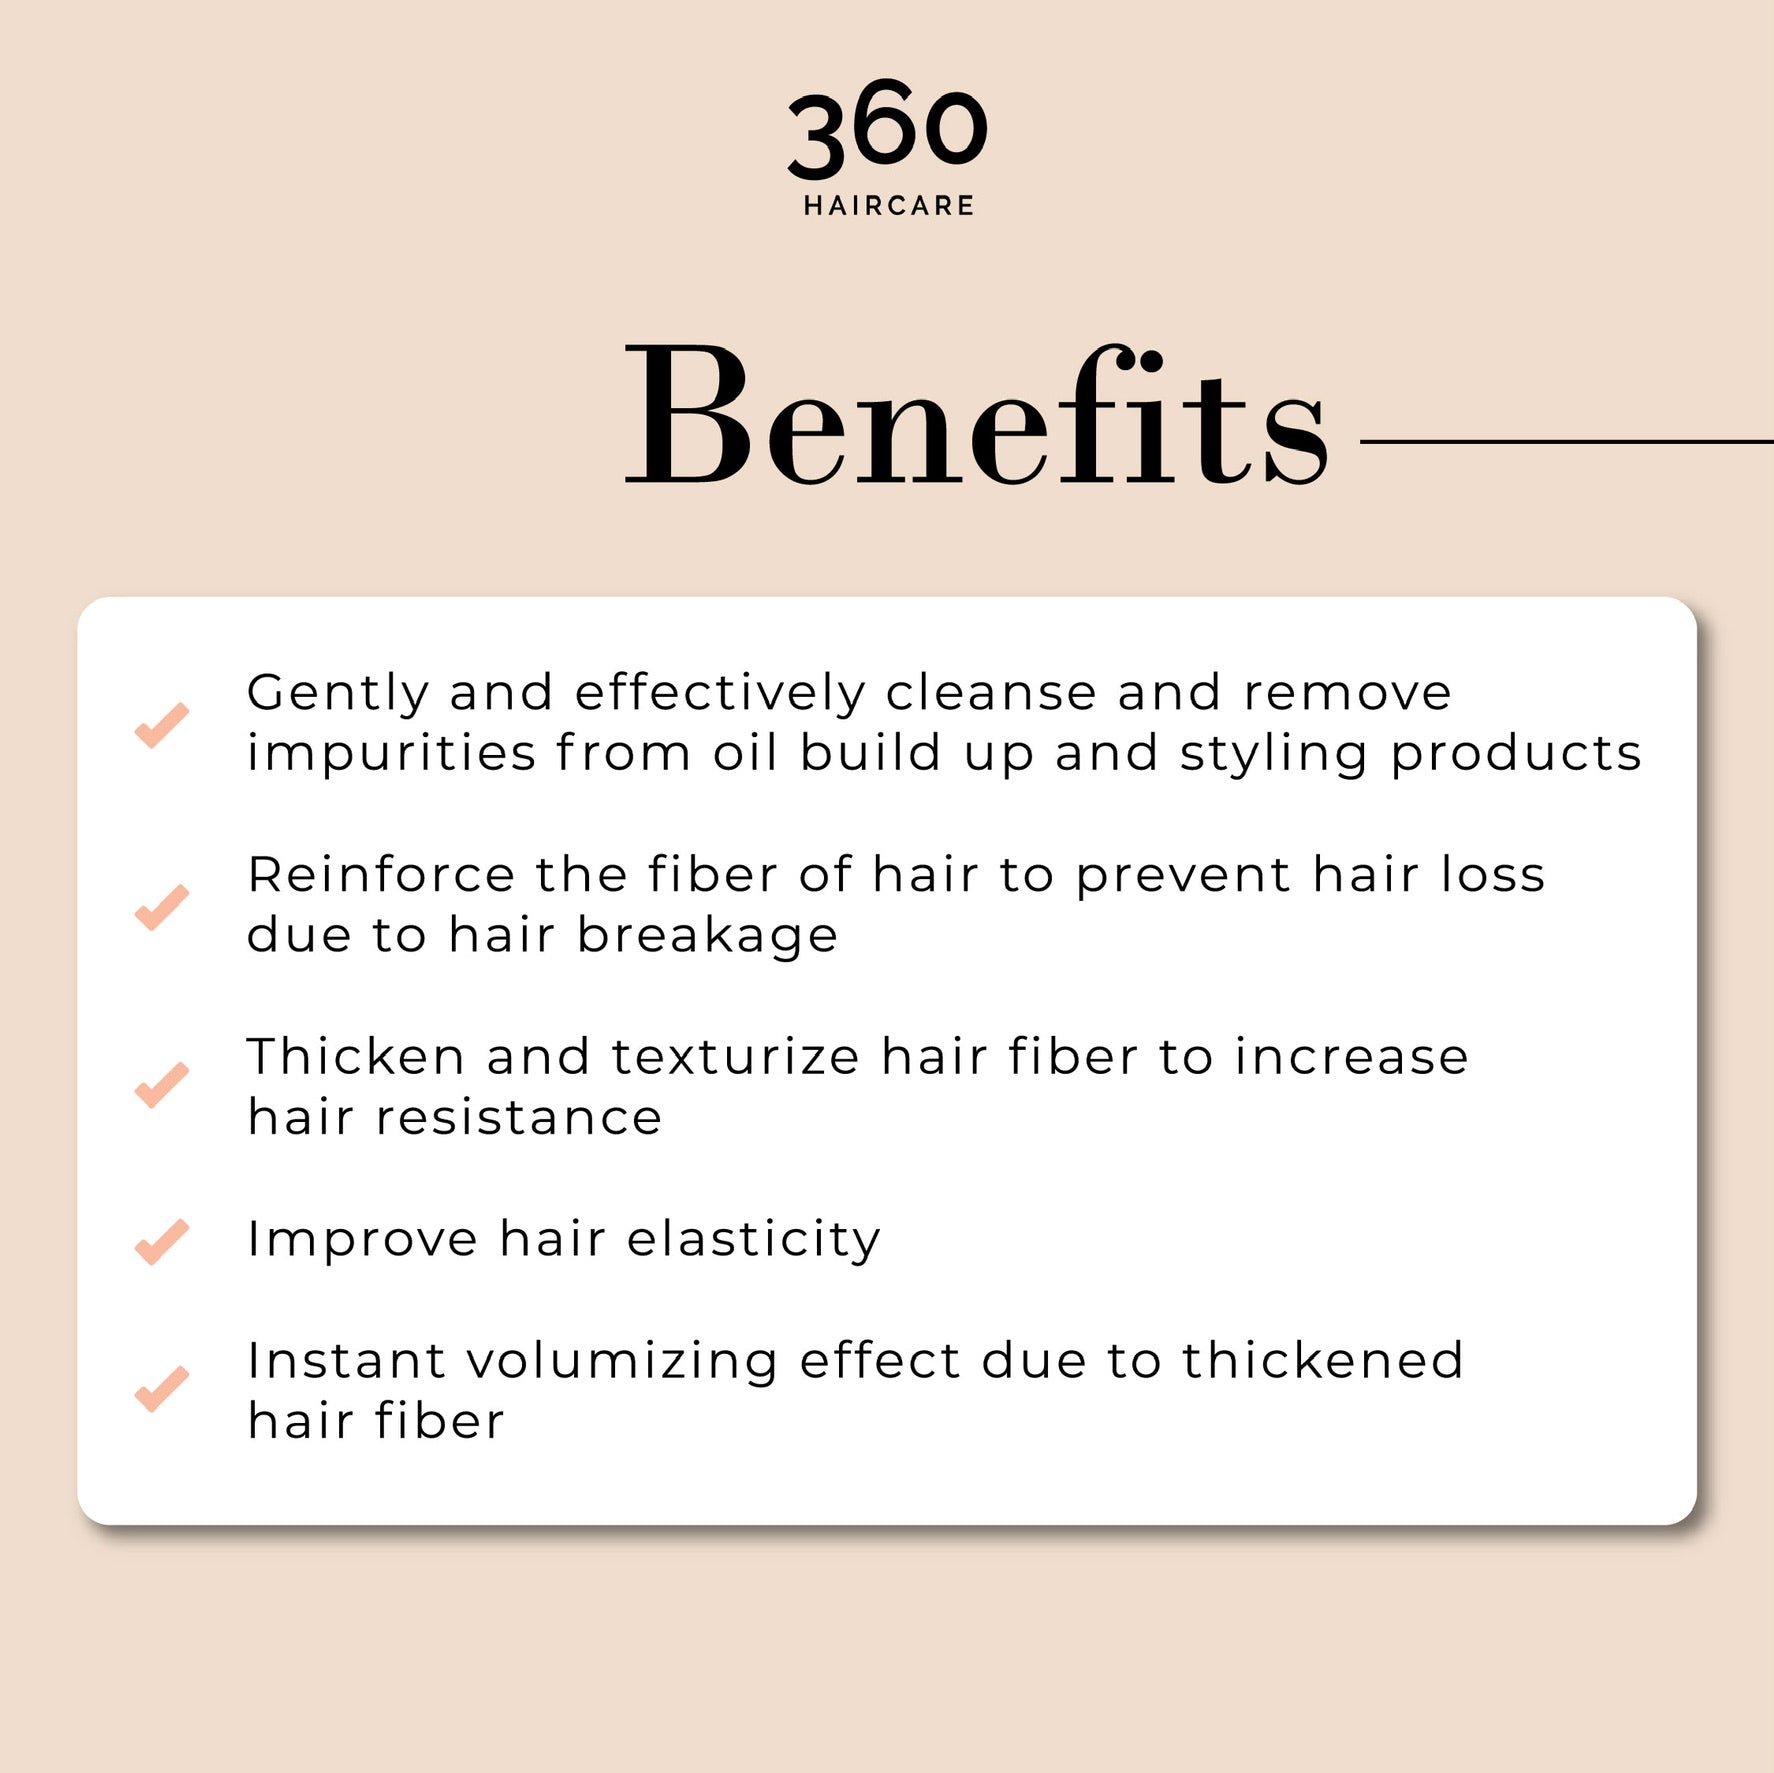 360 Haircare Bee Theory Shampoo (300ml)